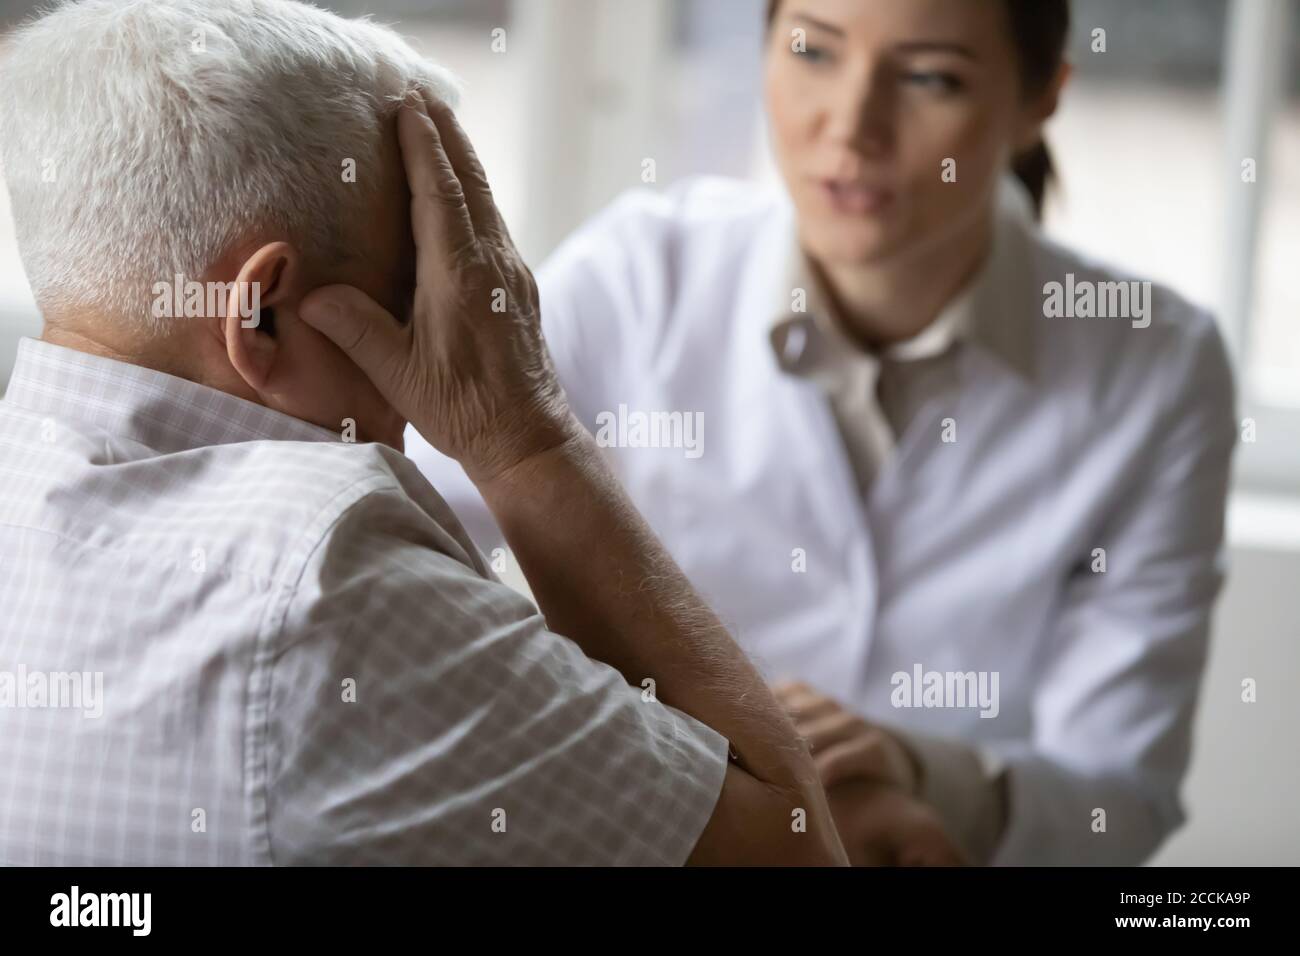 Stressed older senior patient complaining about migraine illness. Stock Photo